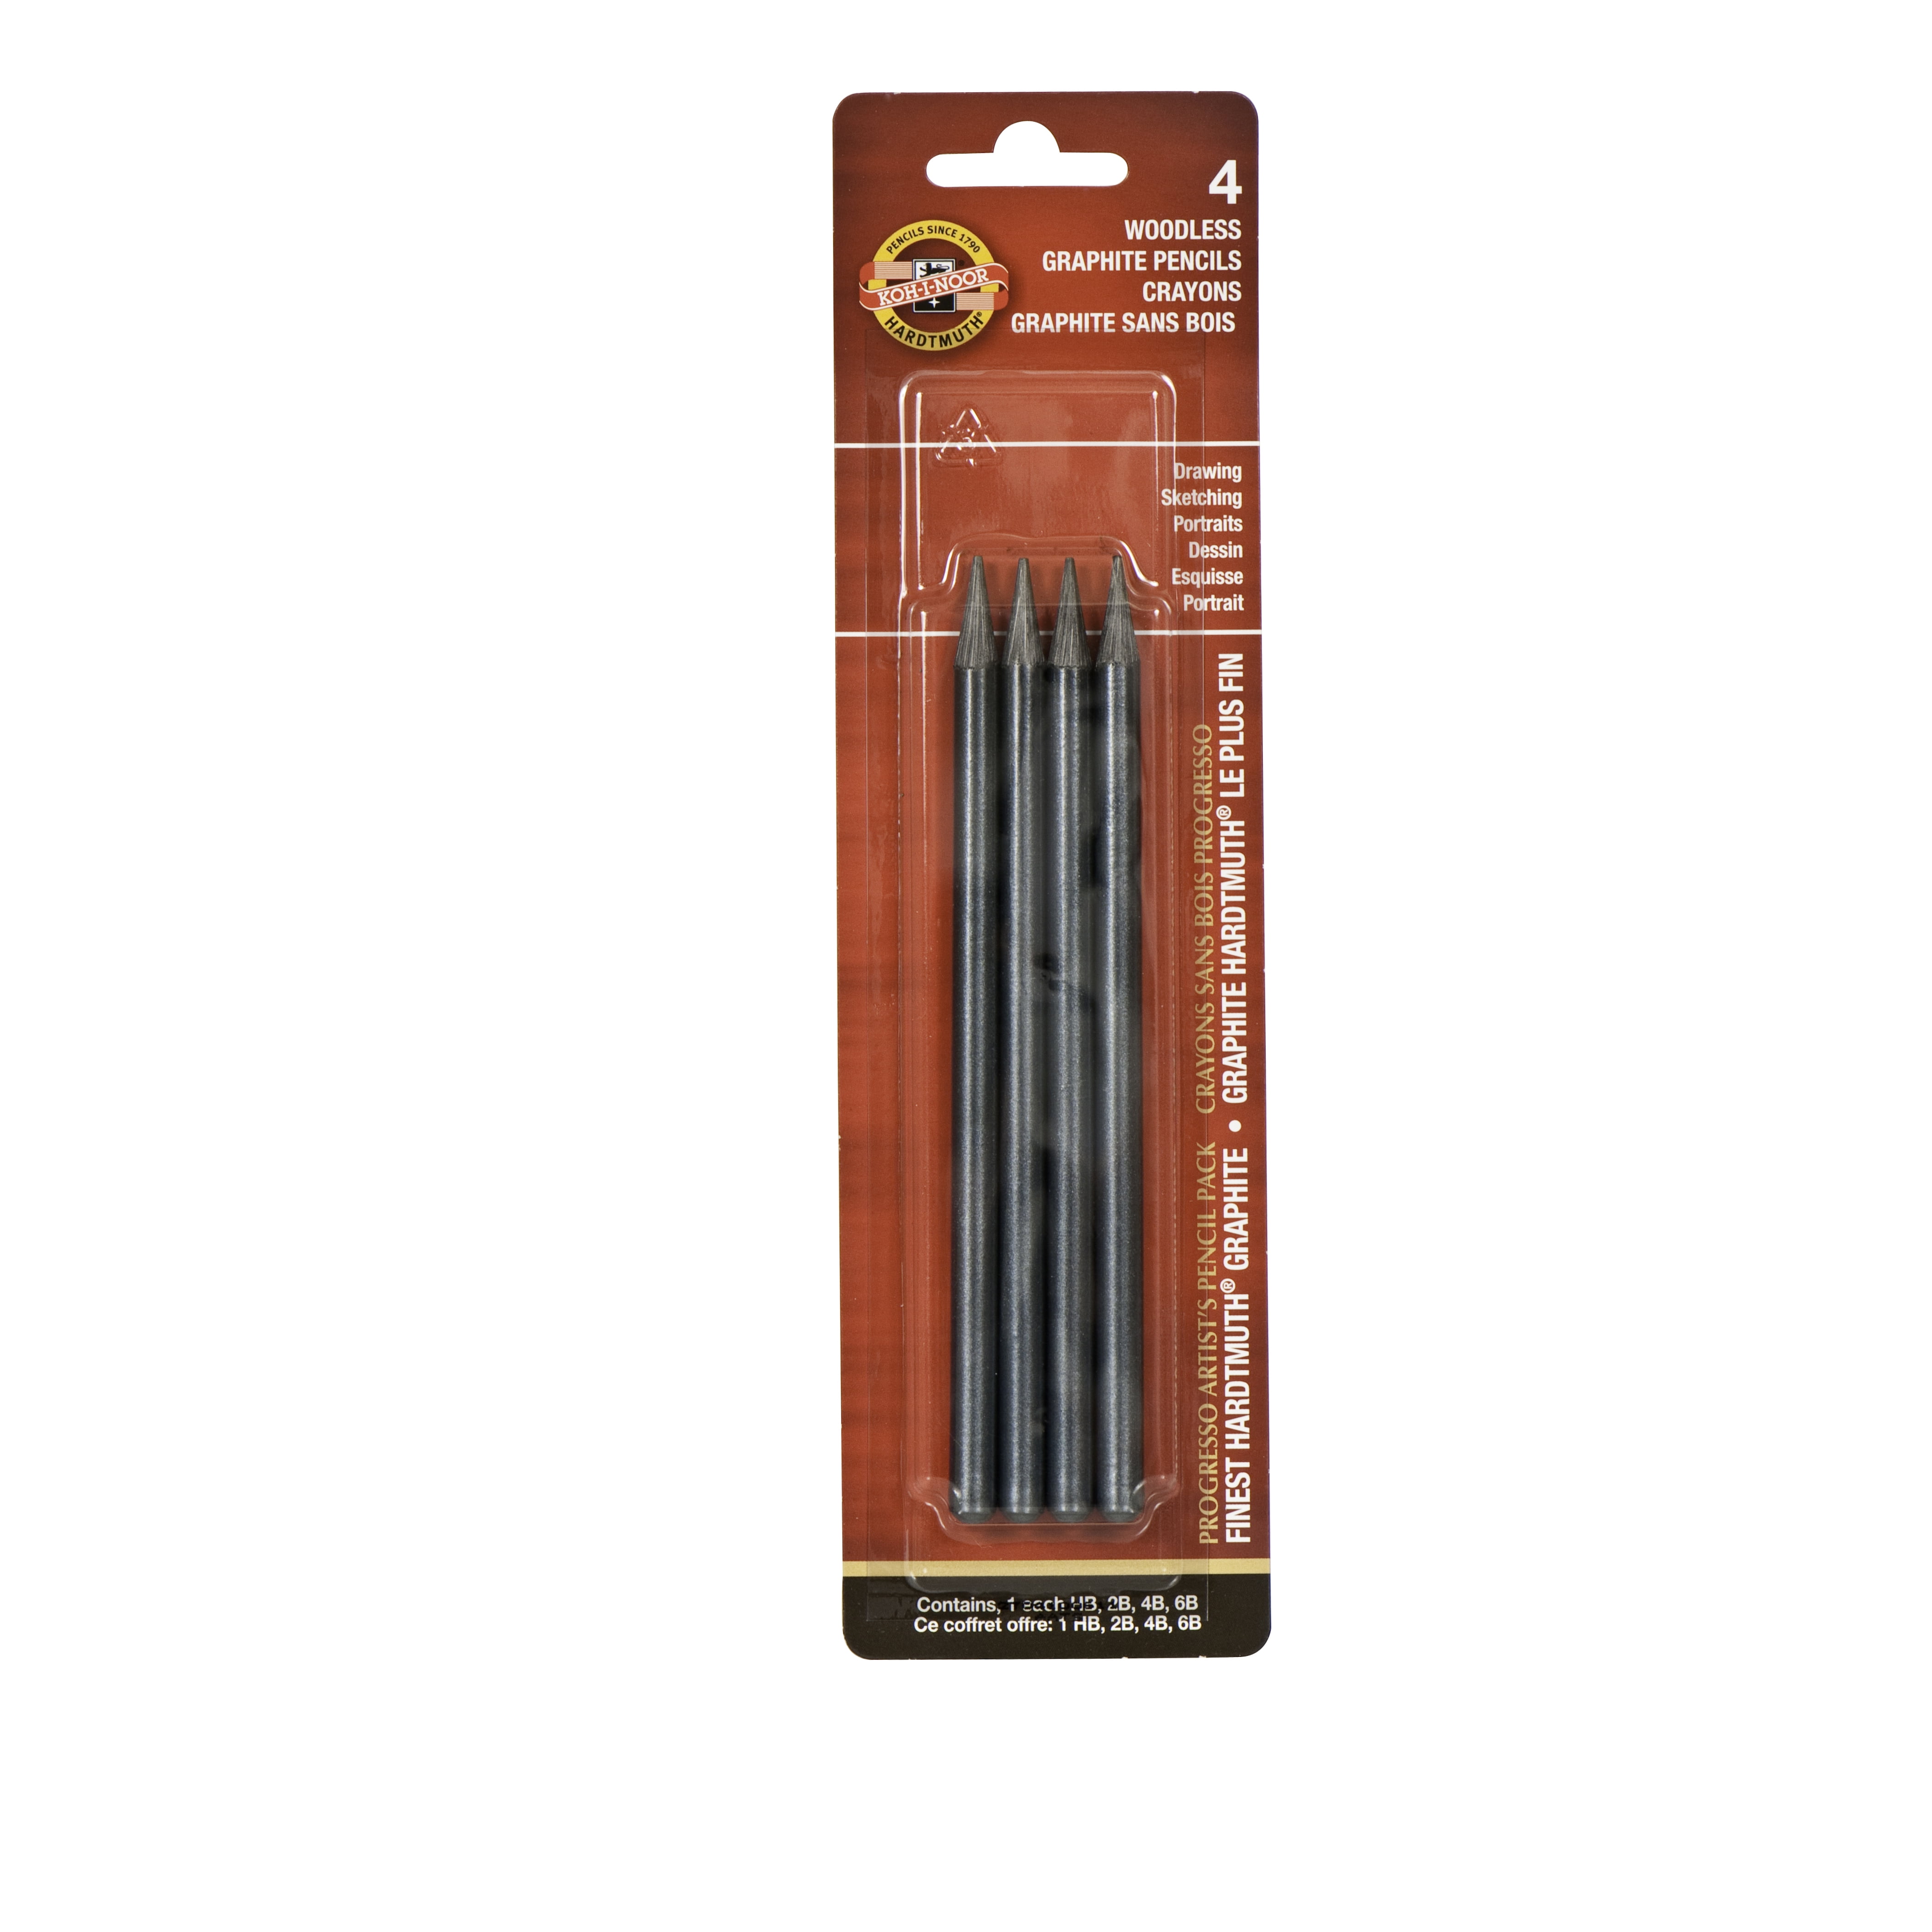 3pcs KOH-I-NOOR Hardtmuth Soft Erasers for Graphite Pencils